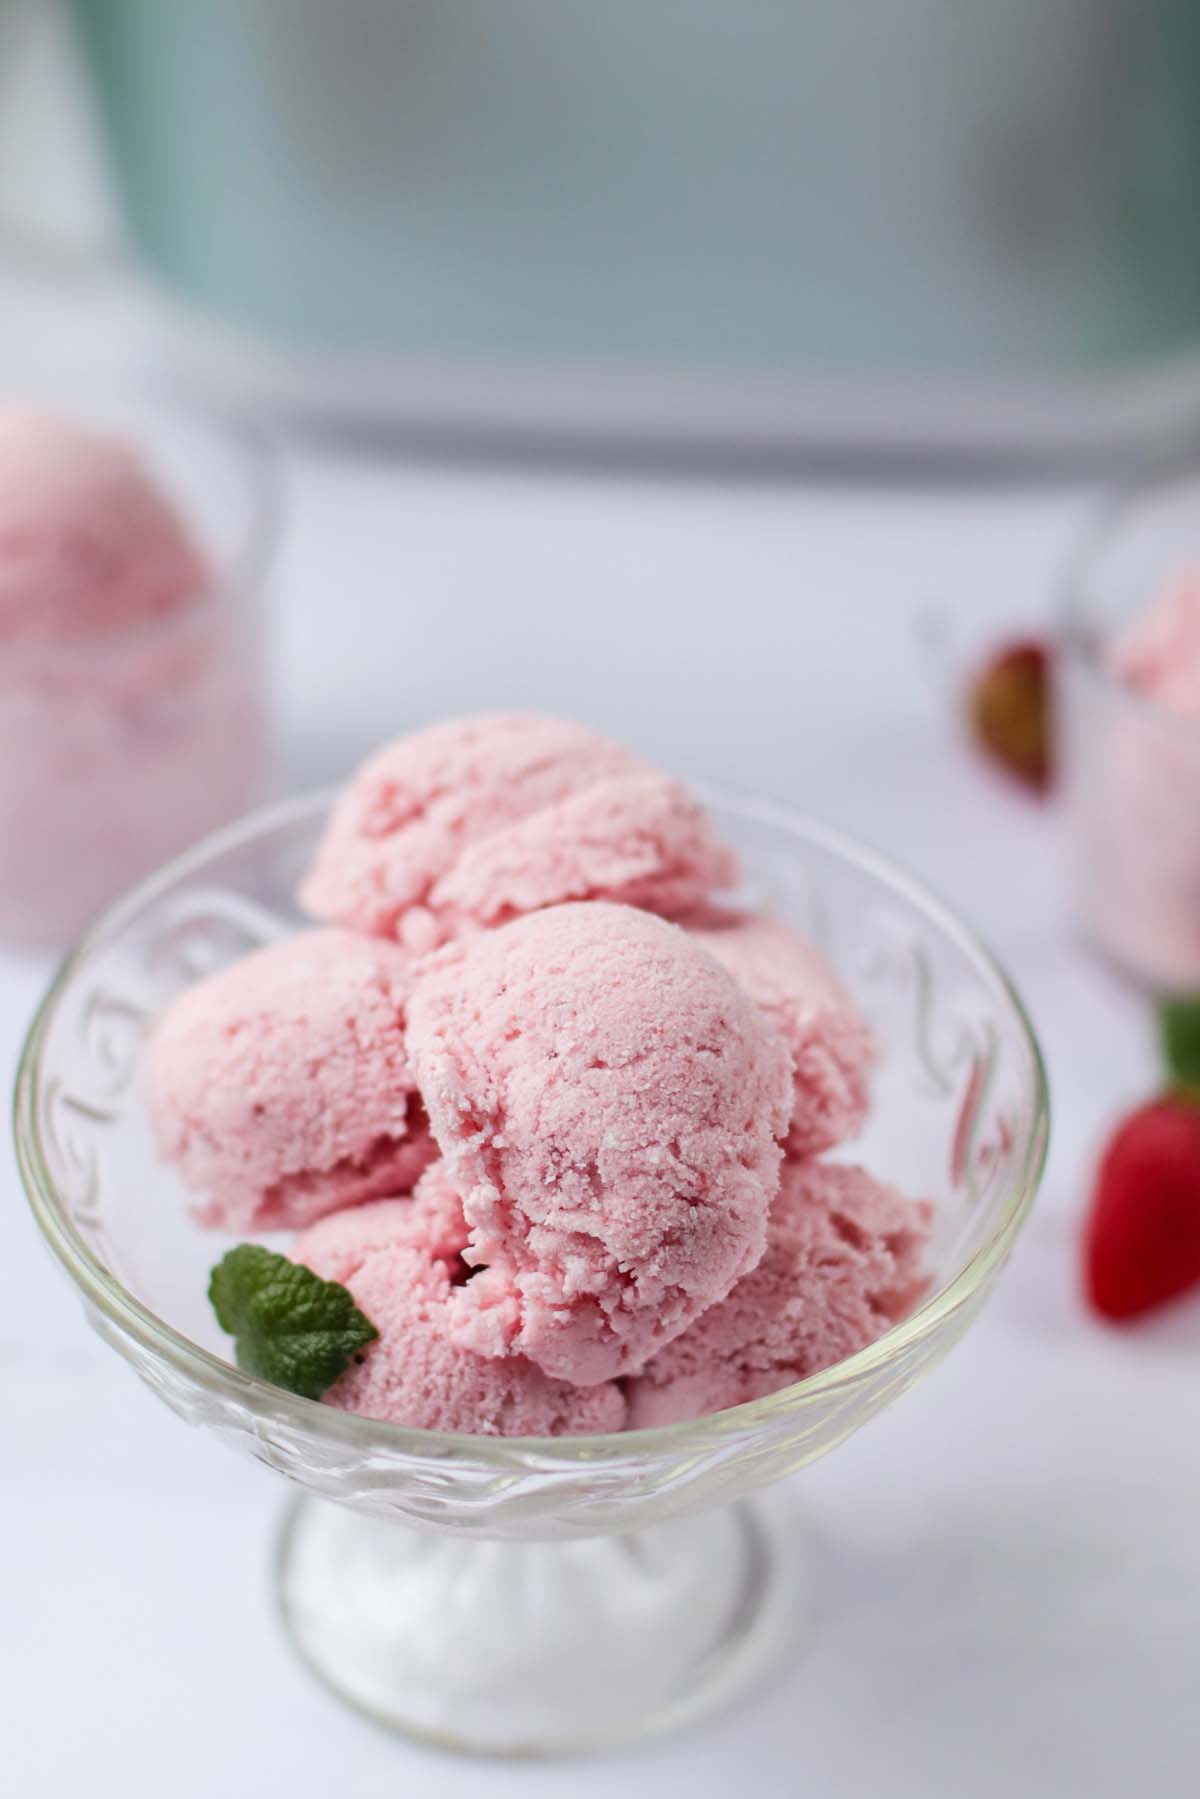 strawberry ice cream scooped in a glass dish.